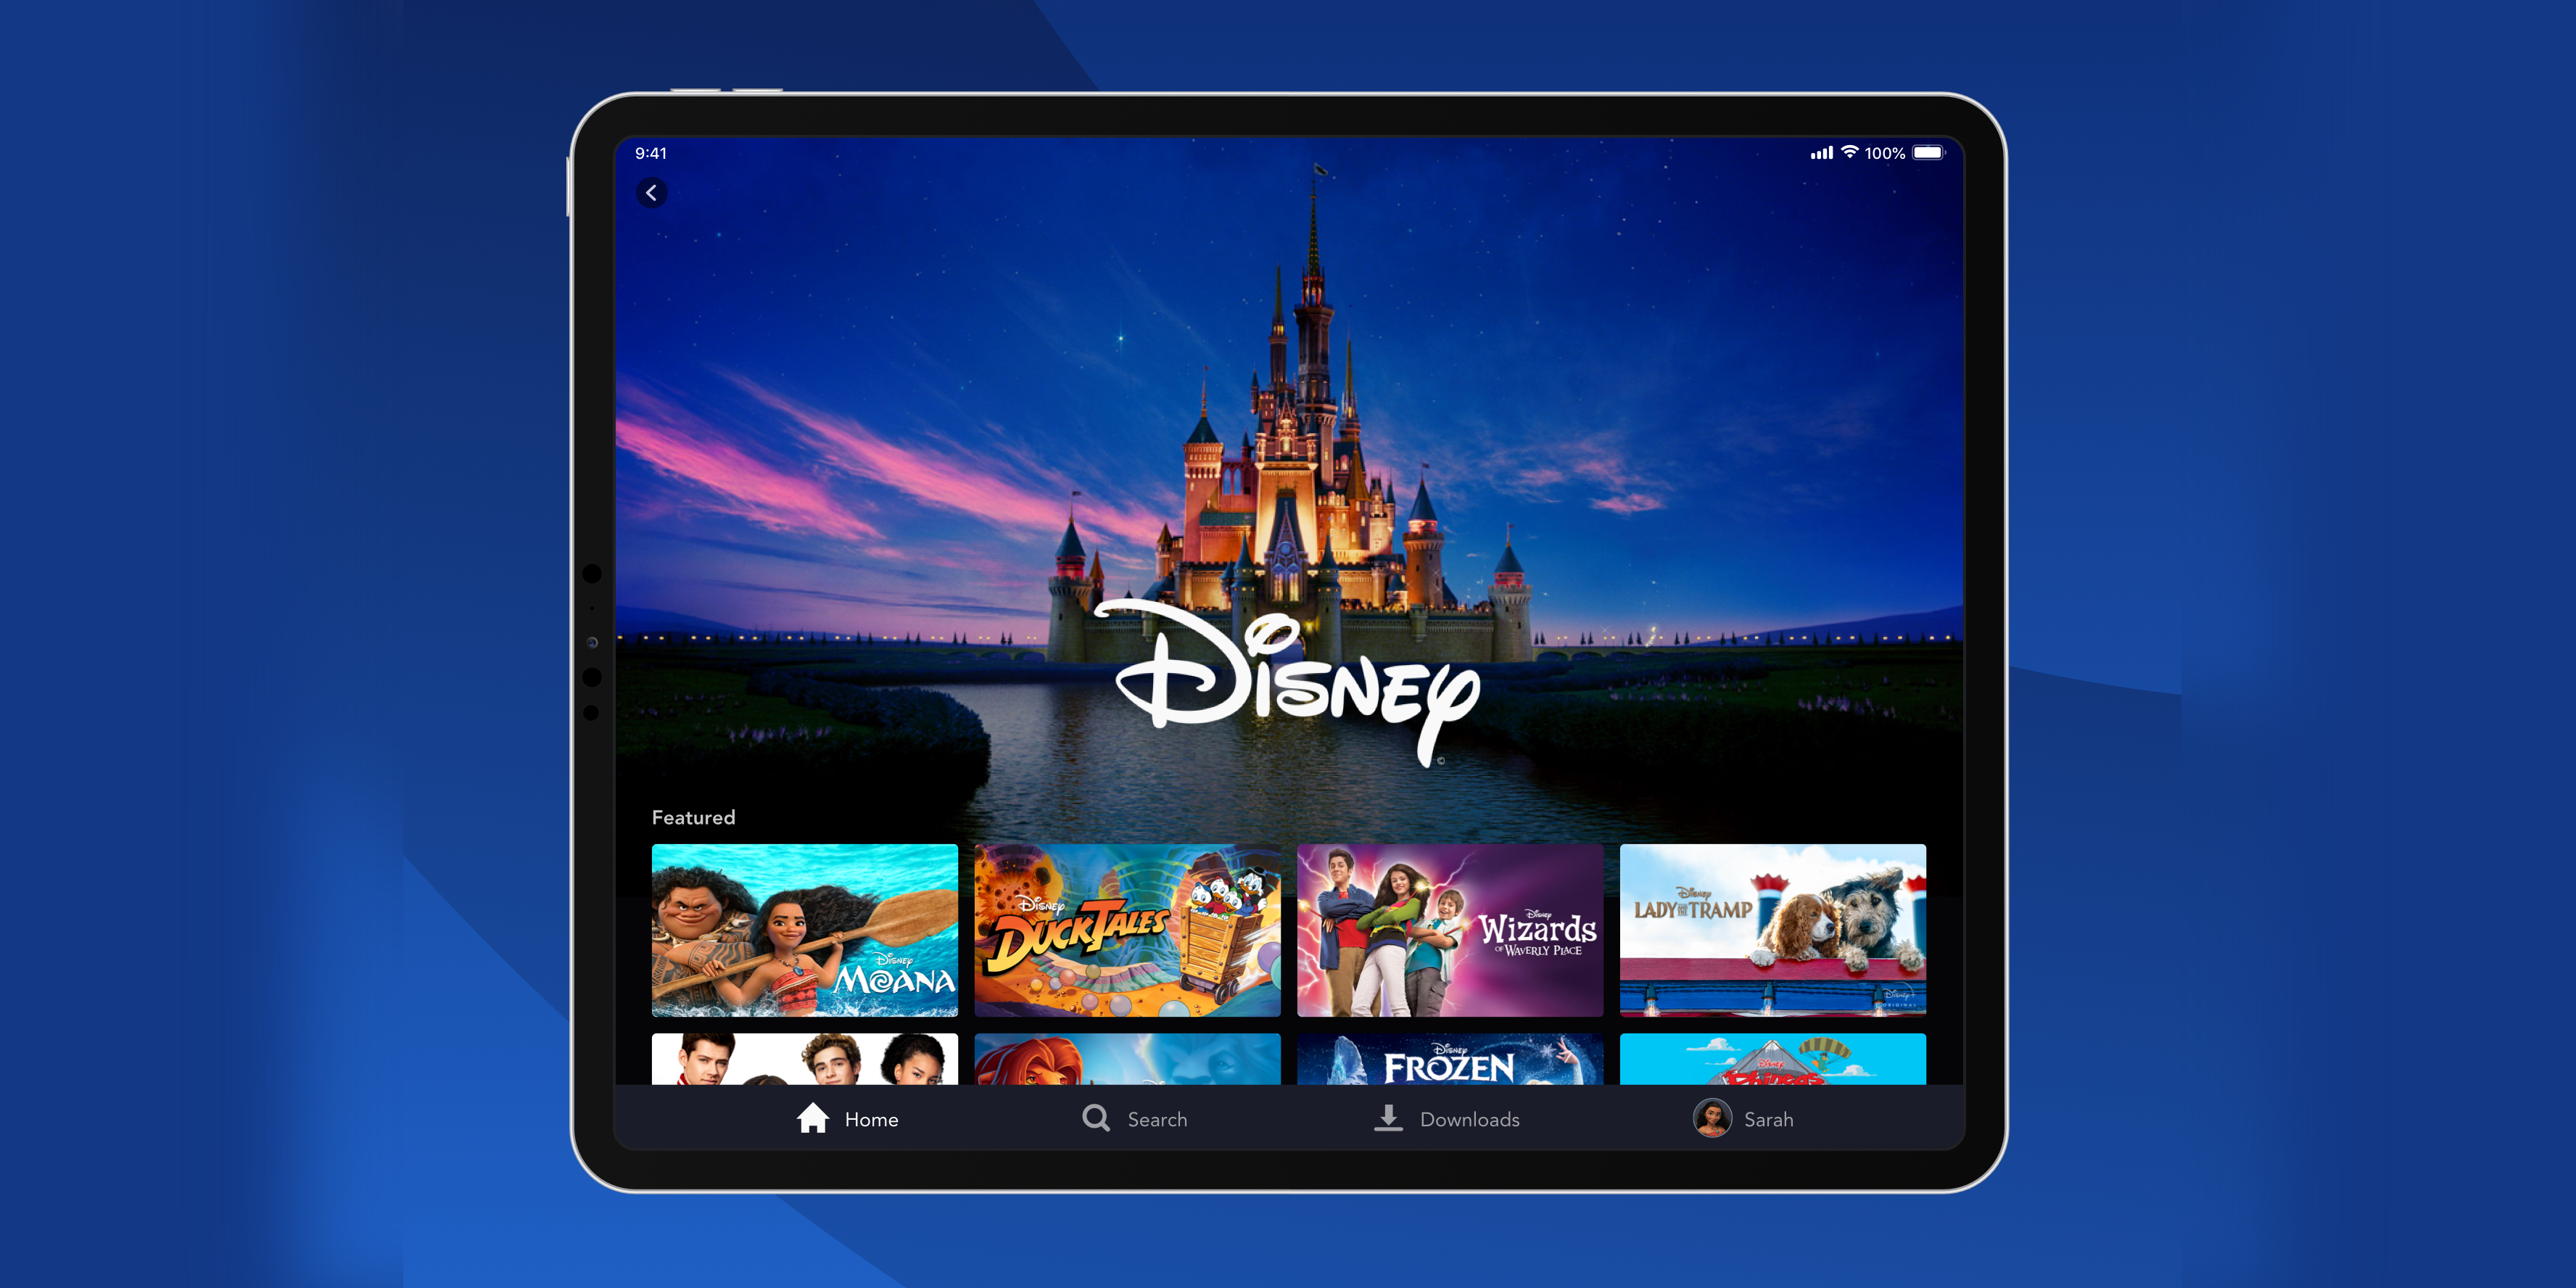 Disney Plus app available on iPhone, iPad and Apple TV